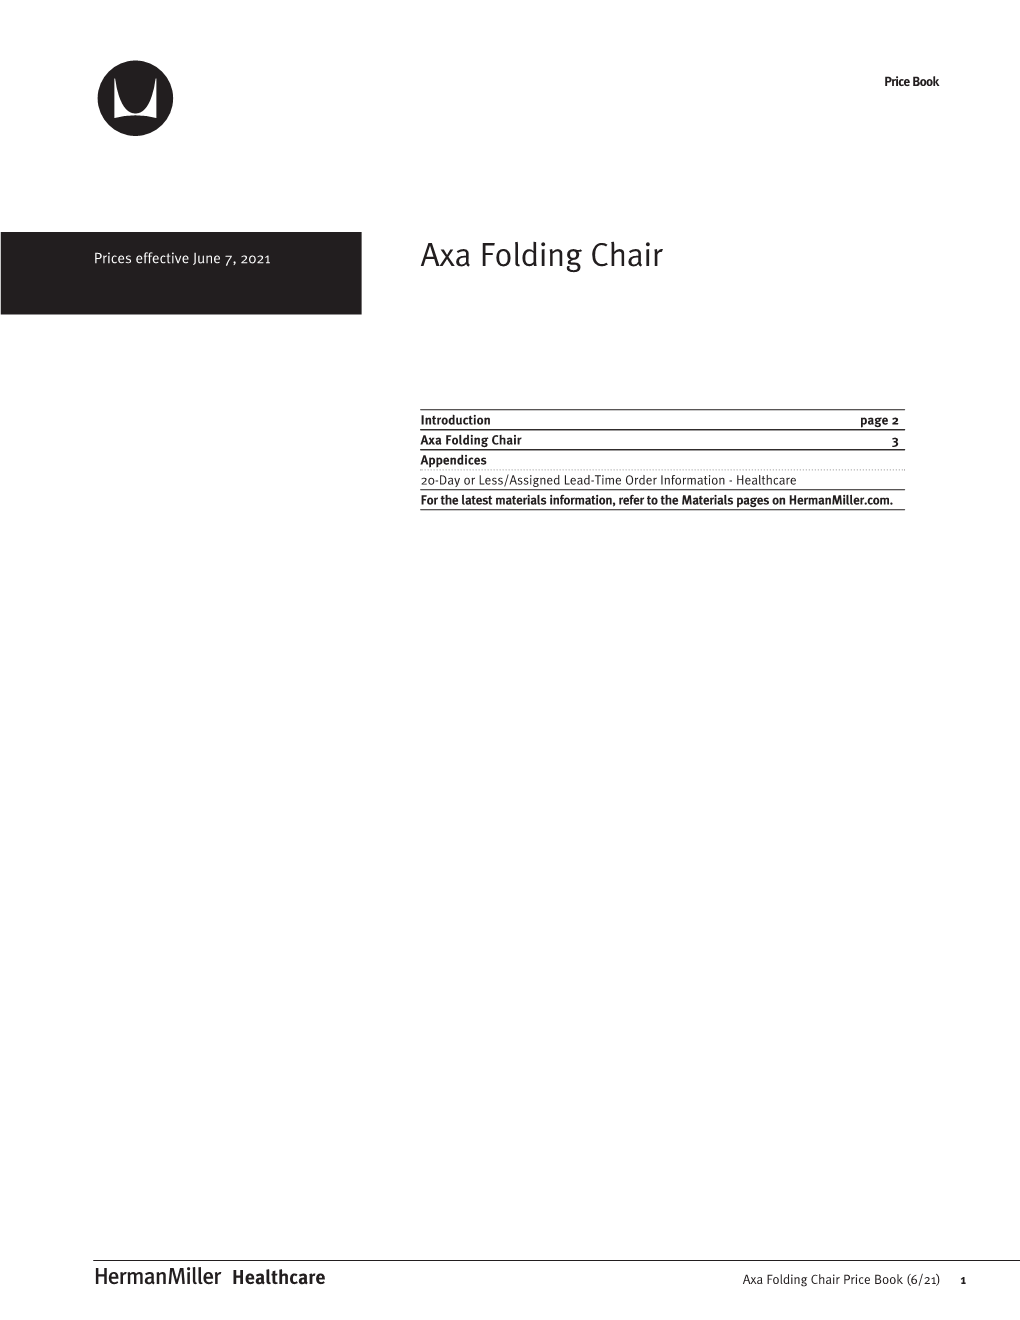 Price Book: Axa Folding Chair